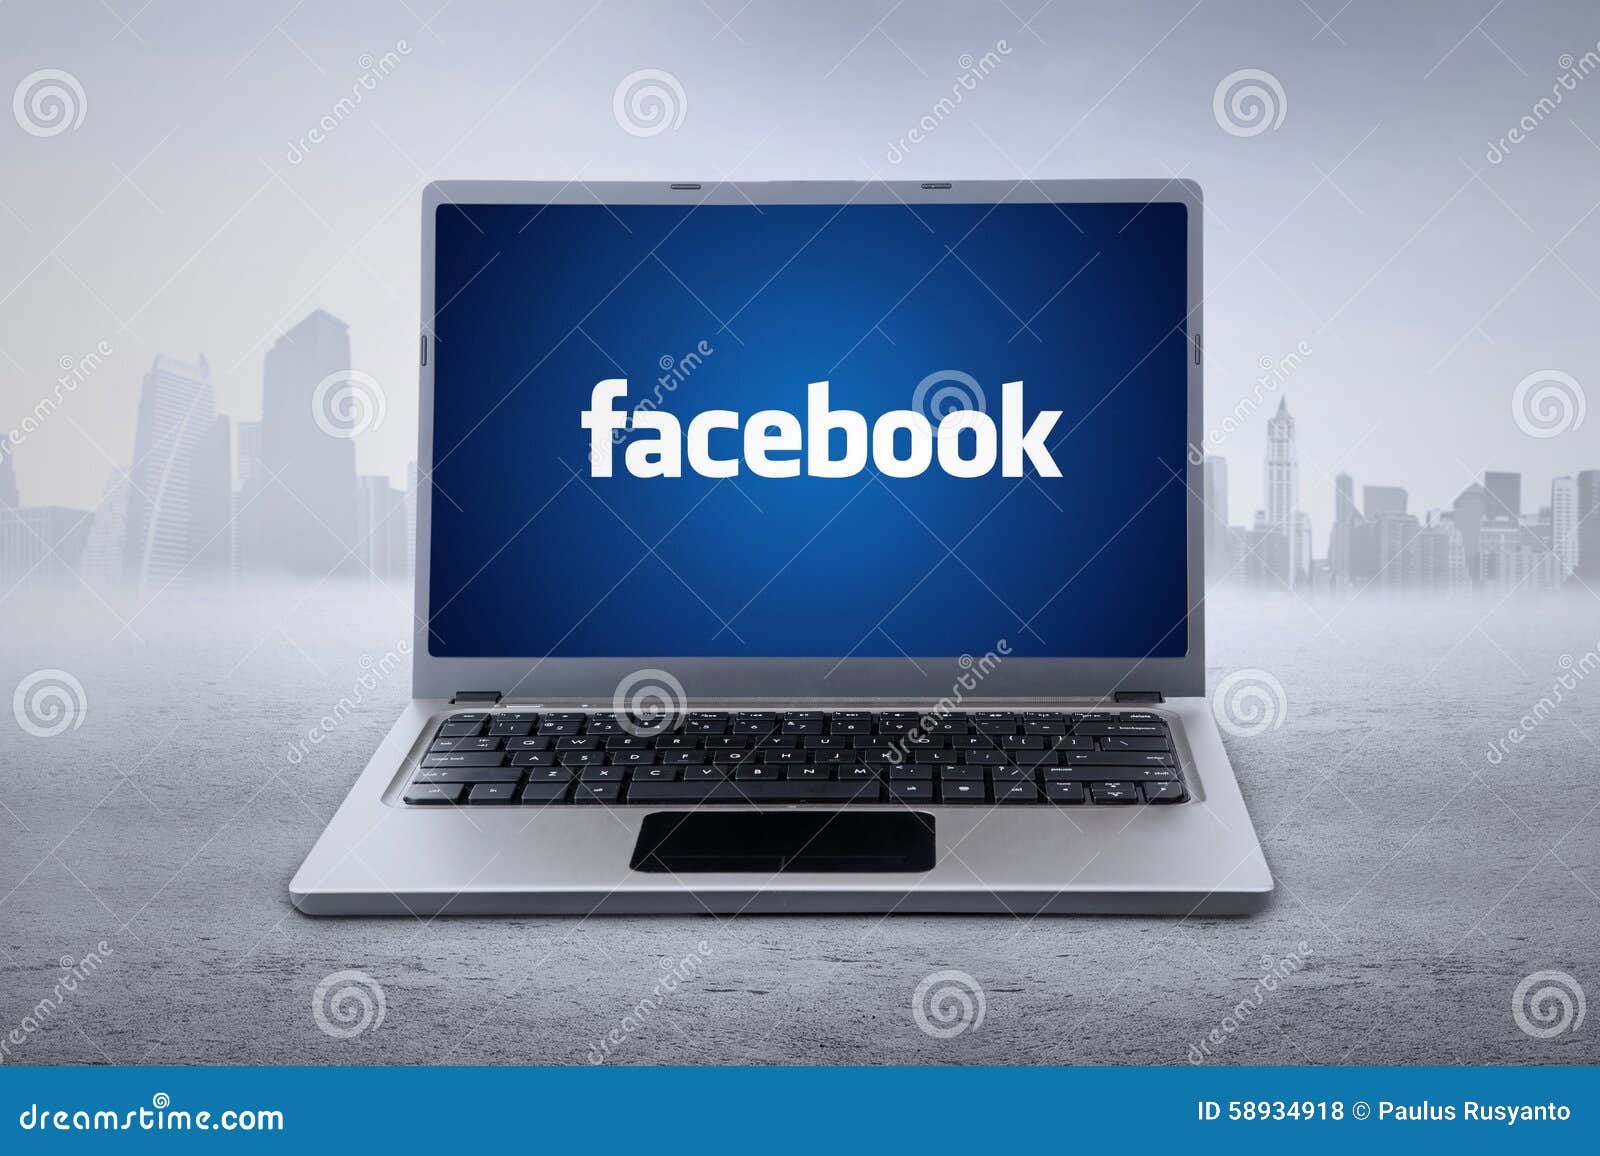 download facebook laptop windows 10